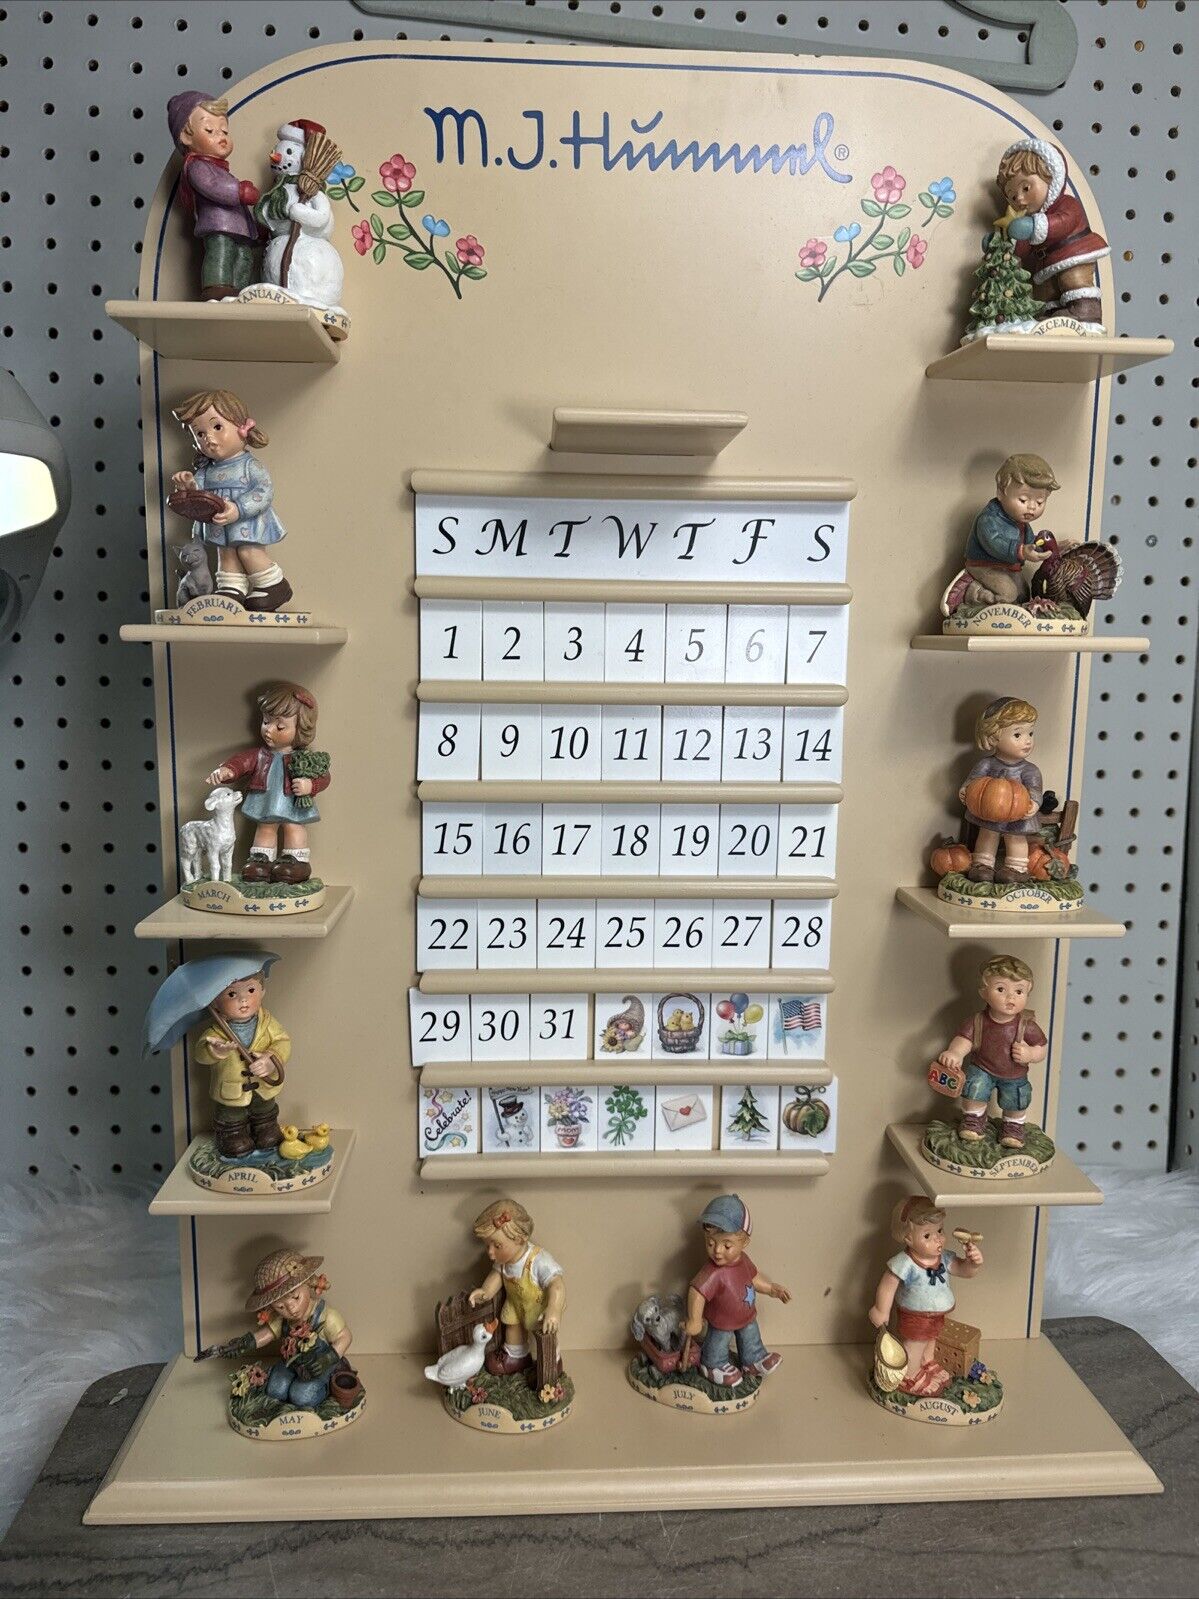 MJ Hummel Calendar Figurines Display Wall Shelf 2015 w All 12 Figurines VGC